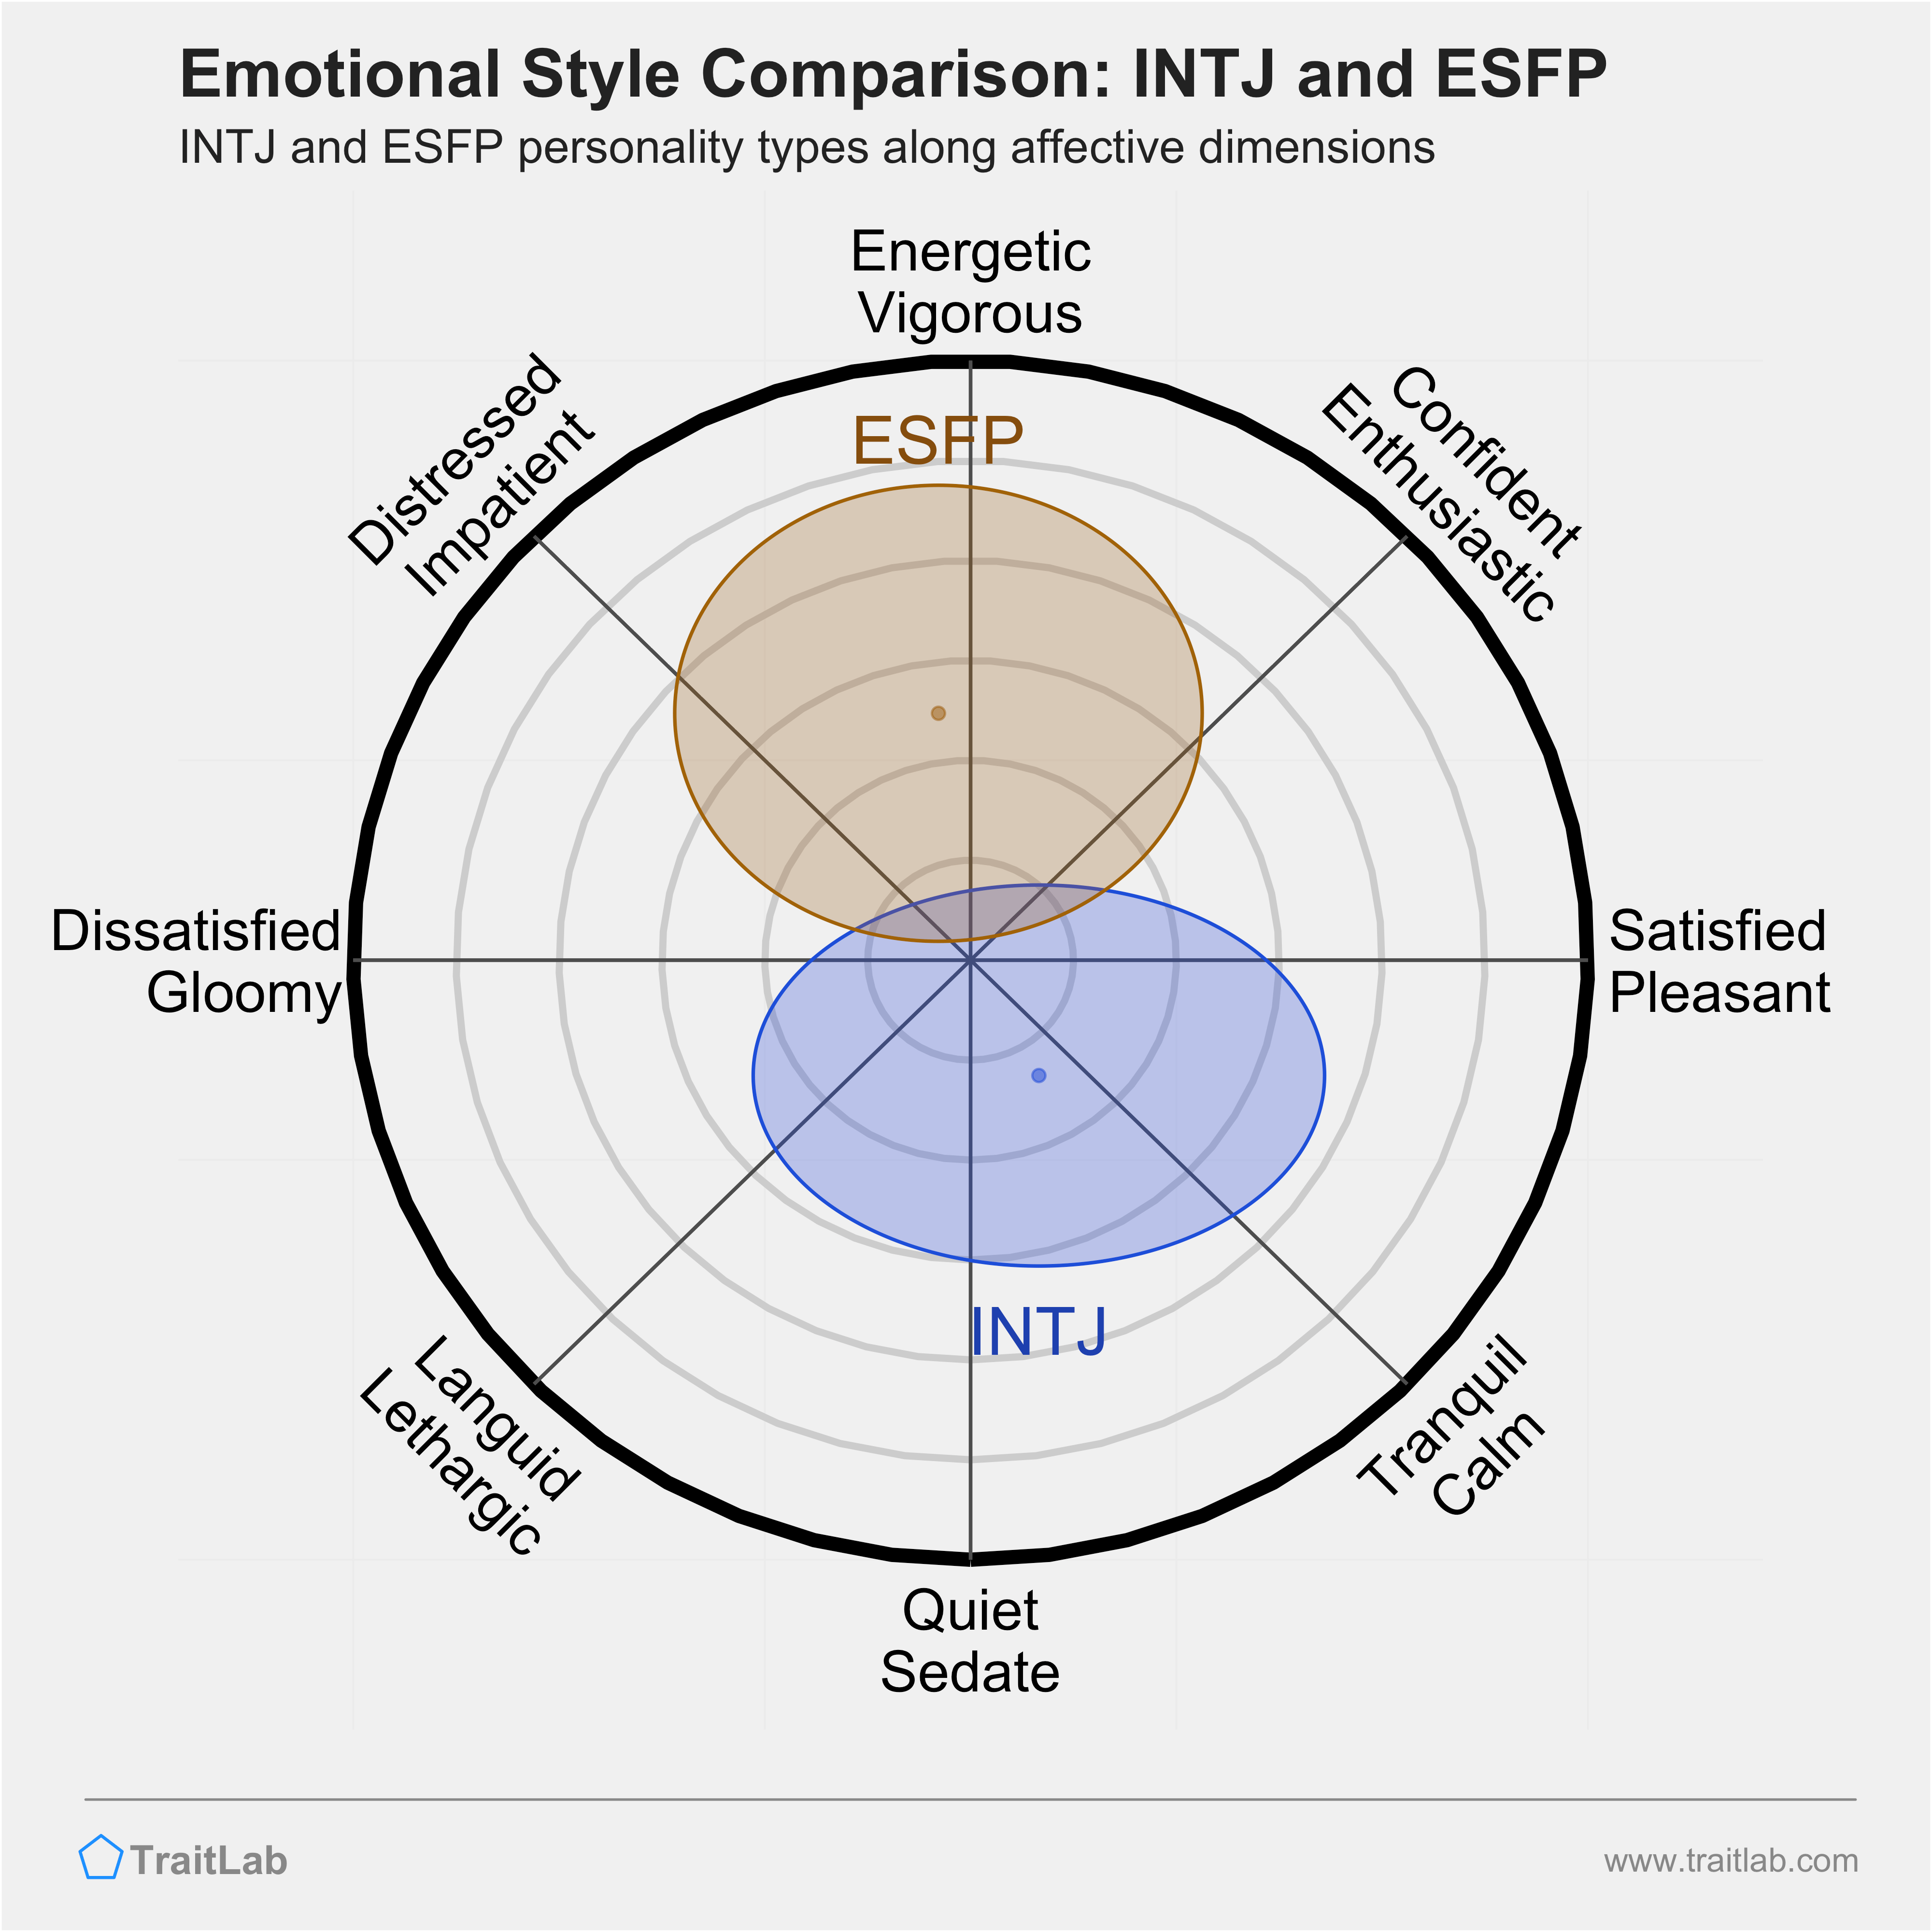 INTJ and ESFP comparison across emotional (affective) dimensions